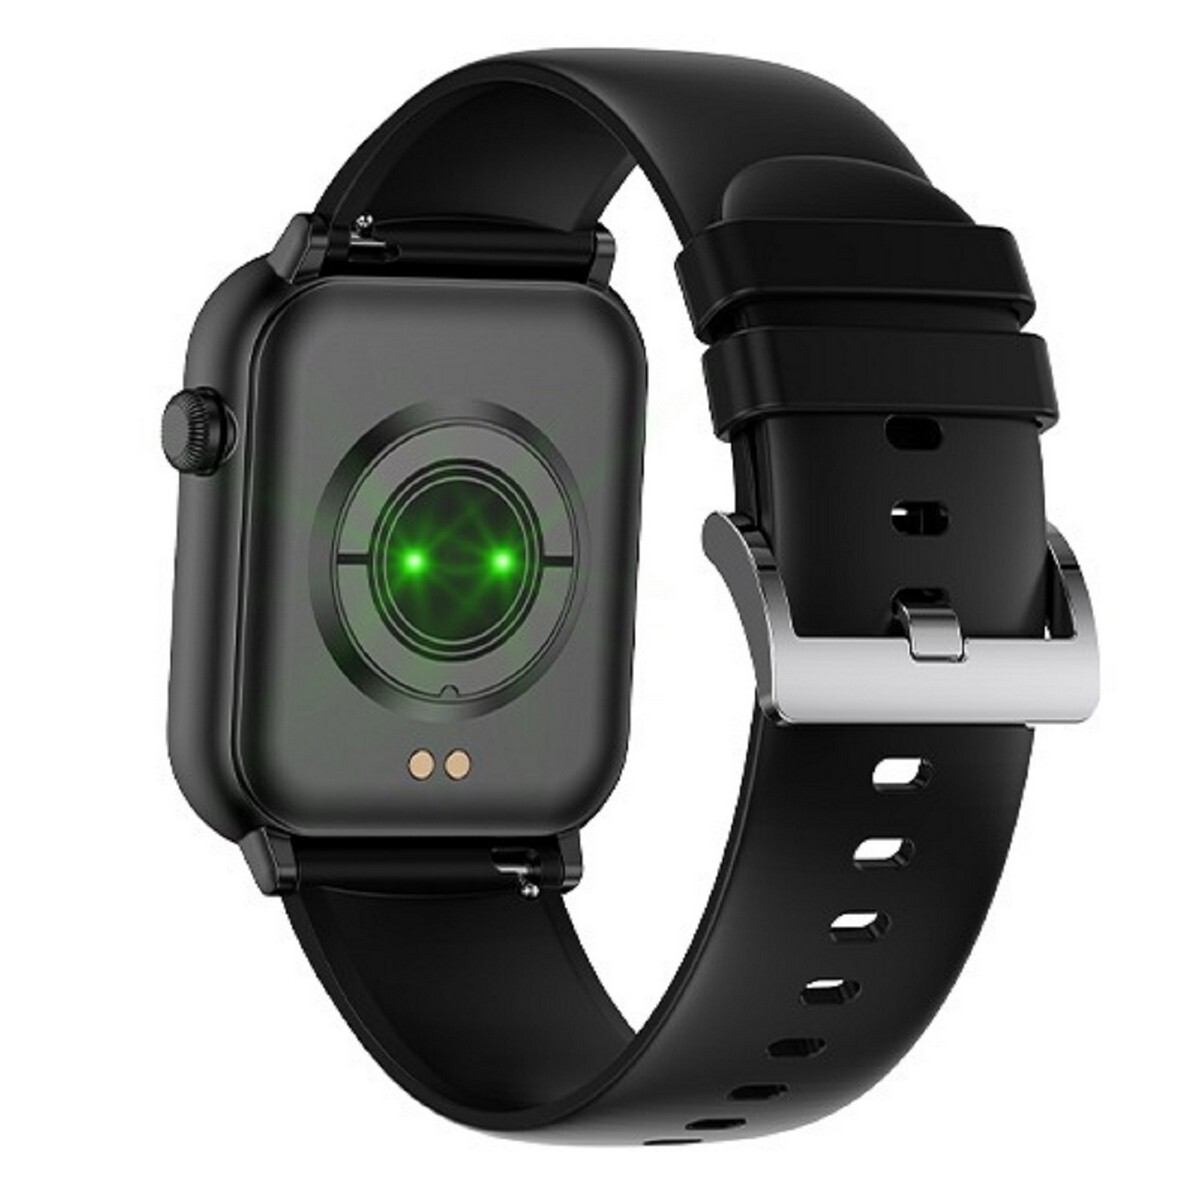 FireBoltt Smart Watch Ninja Fit BSW063 Black